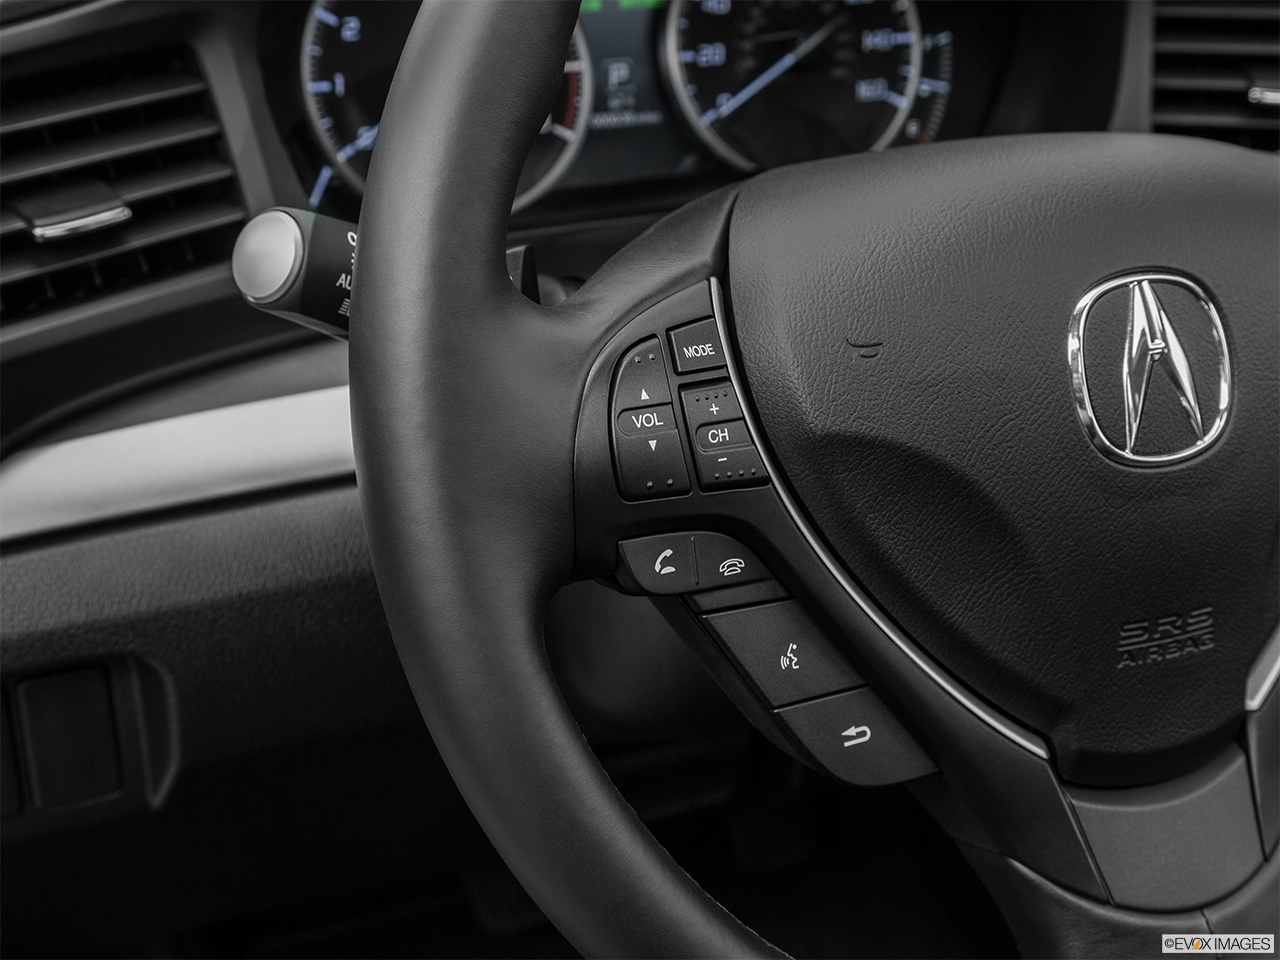 2016 Acura ILX AcuraWatch Plus Steering Wheel Controls (Left Side) 